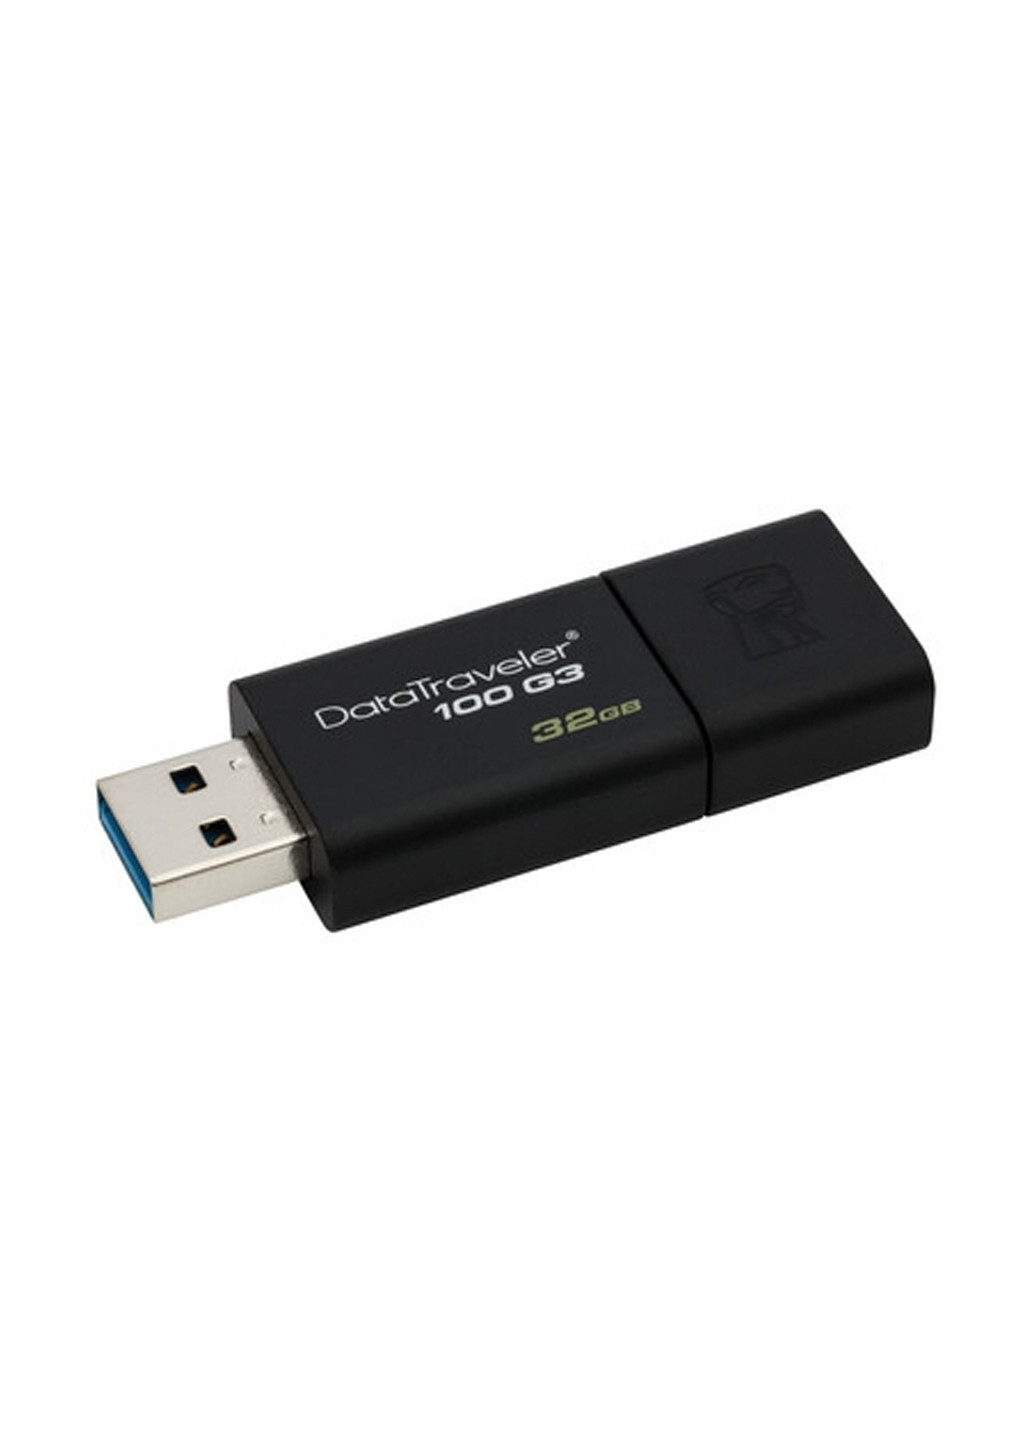 Флеш пам'ять USB DataTraveler 100 G3 32GB USB 3.0 (DT100G3 / 32GB) Kingston флеш память usb kingston datatraveler 100 g3 32gb usb 3.0 (dt100g3/32gb) (136742785)